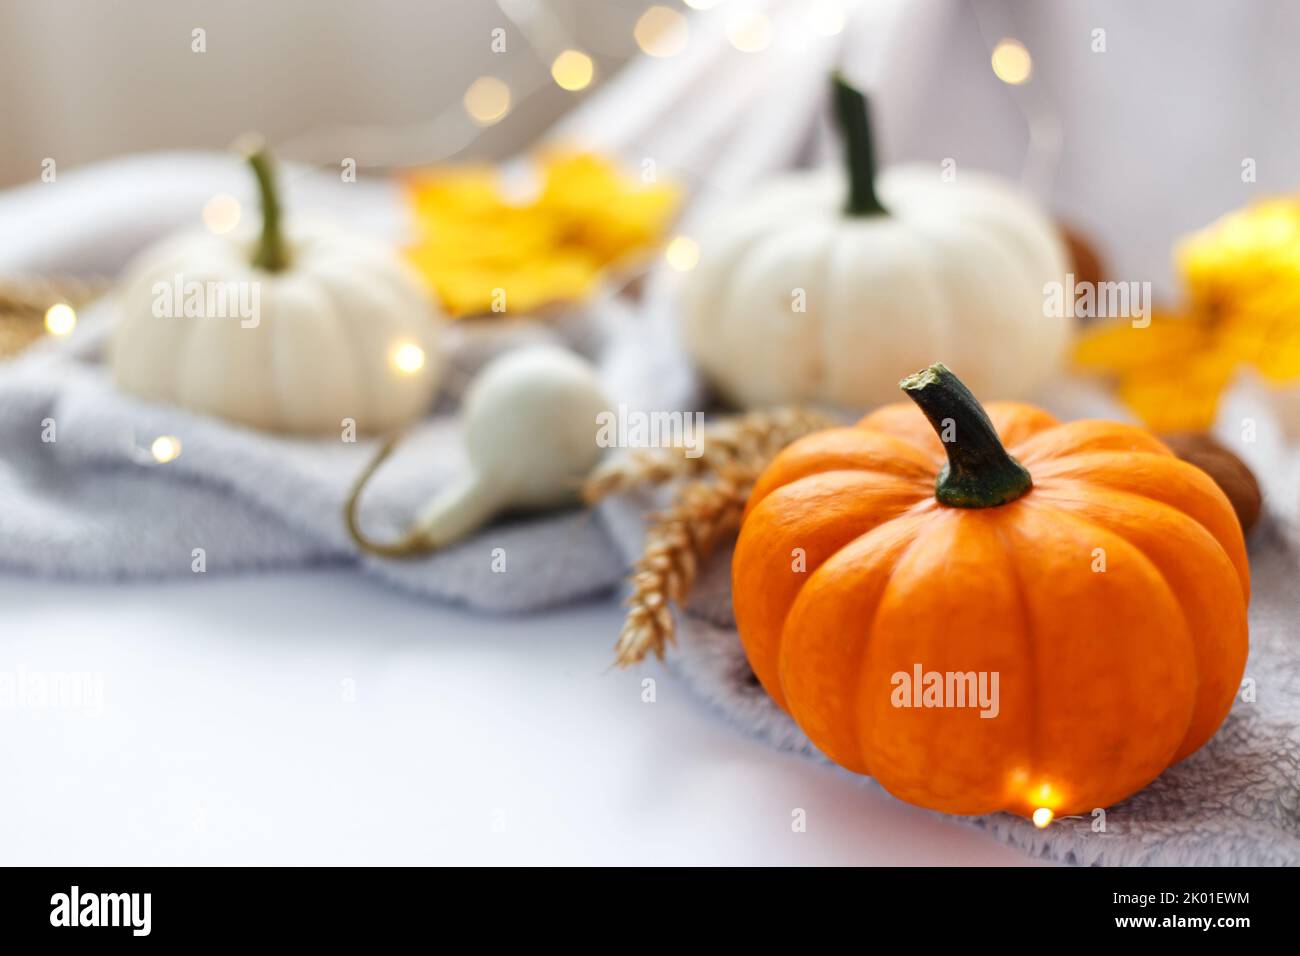 Orange and white decorative pumpkins, selective focus Stock Photo